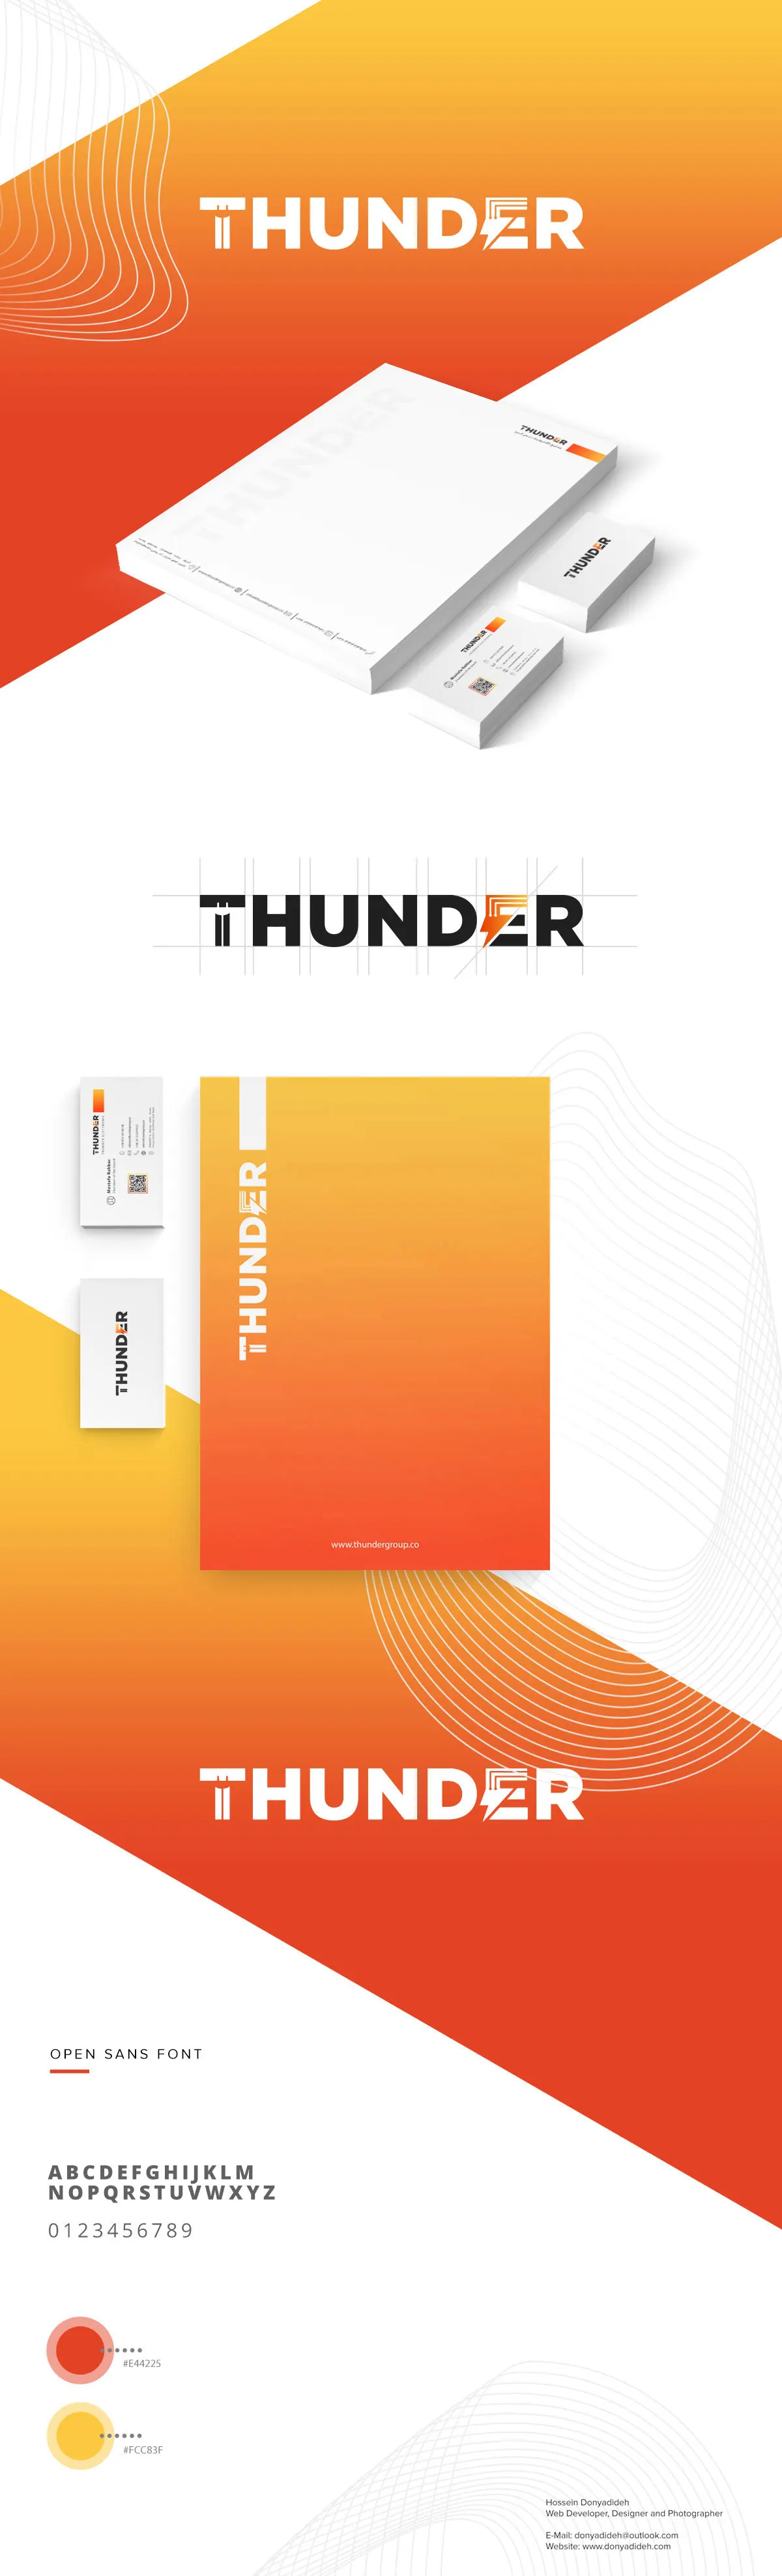 Thunder Electronic logo and office set design | Hossein Donyadideh